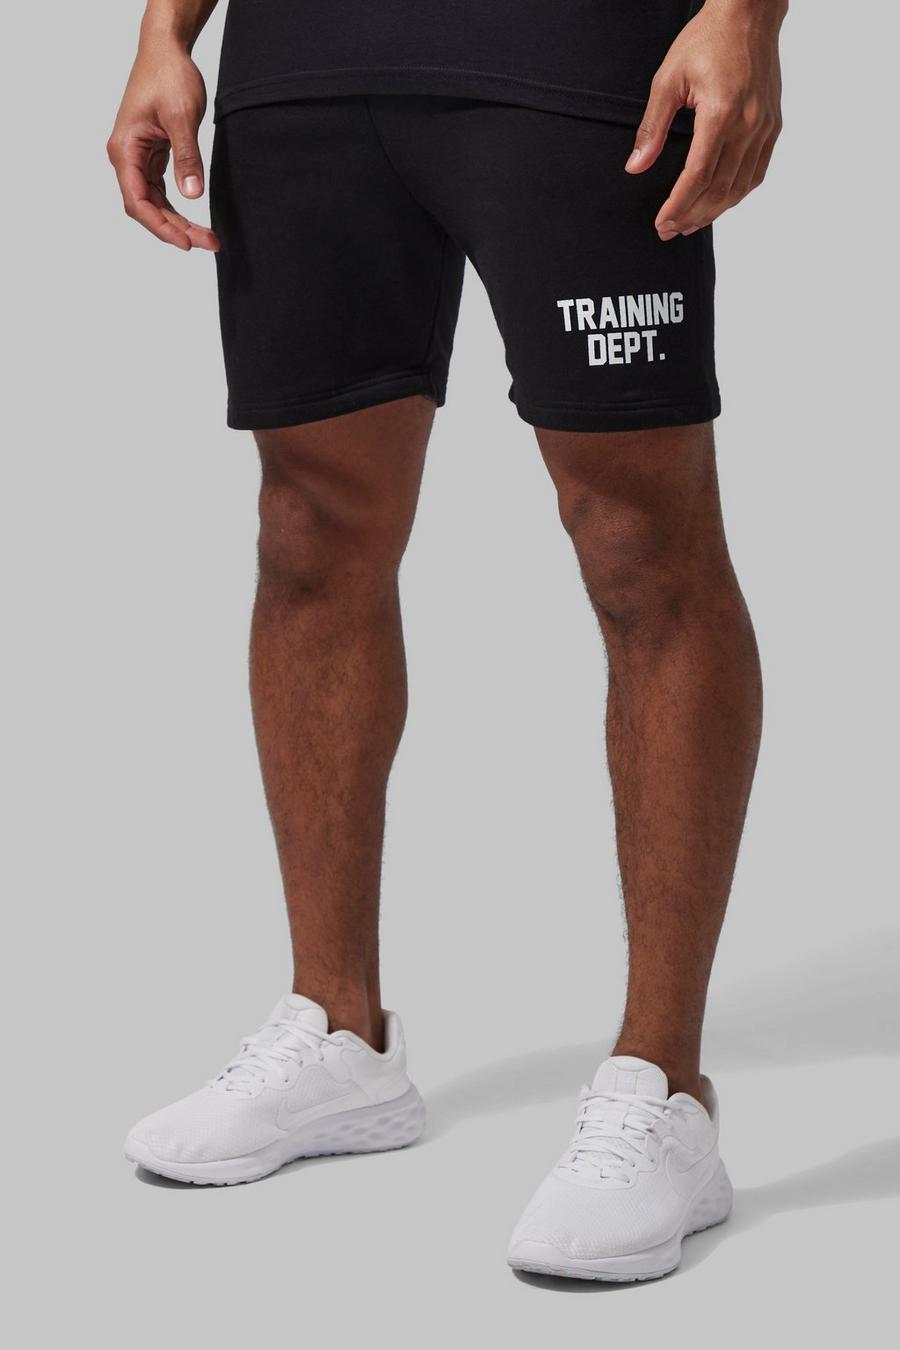 Black schwarz Tall Man Active Training Dept Shorts  